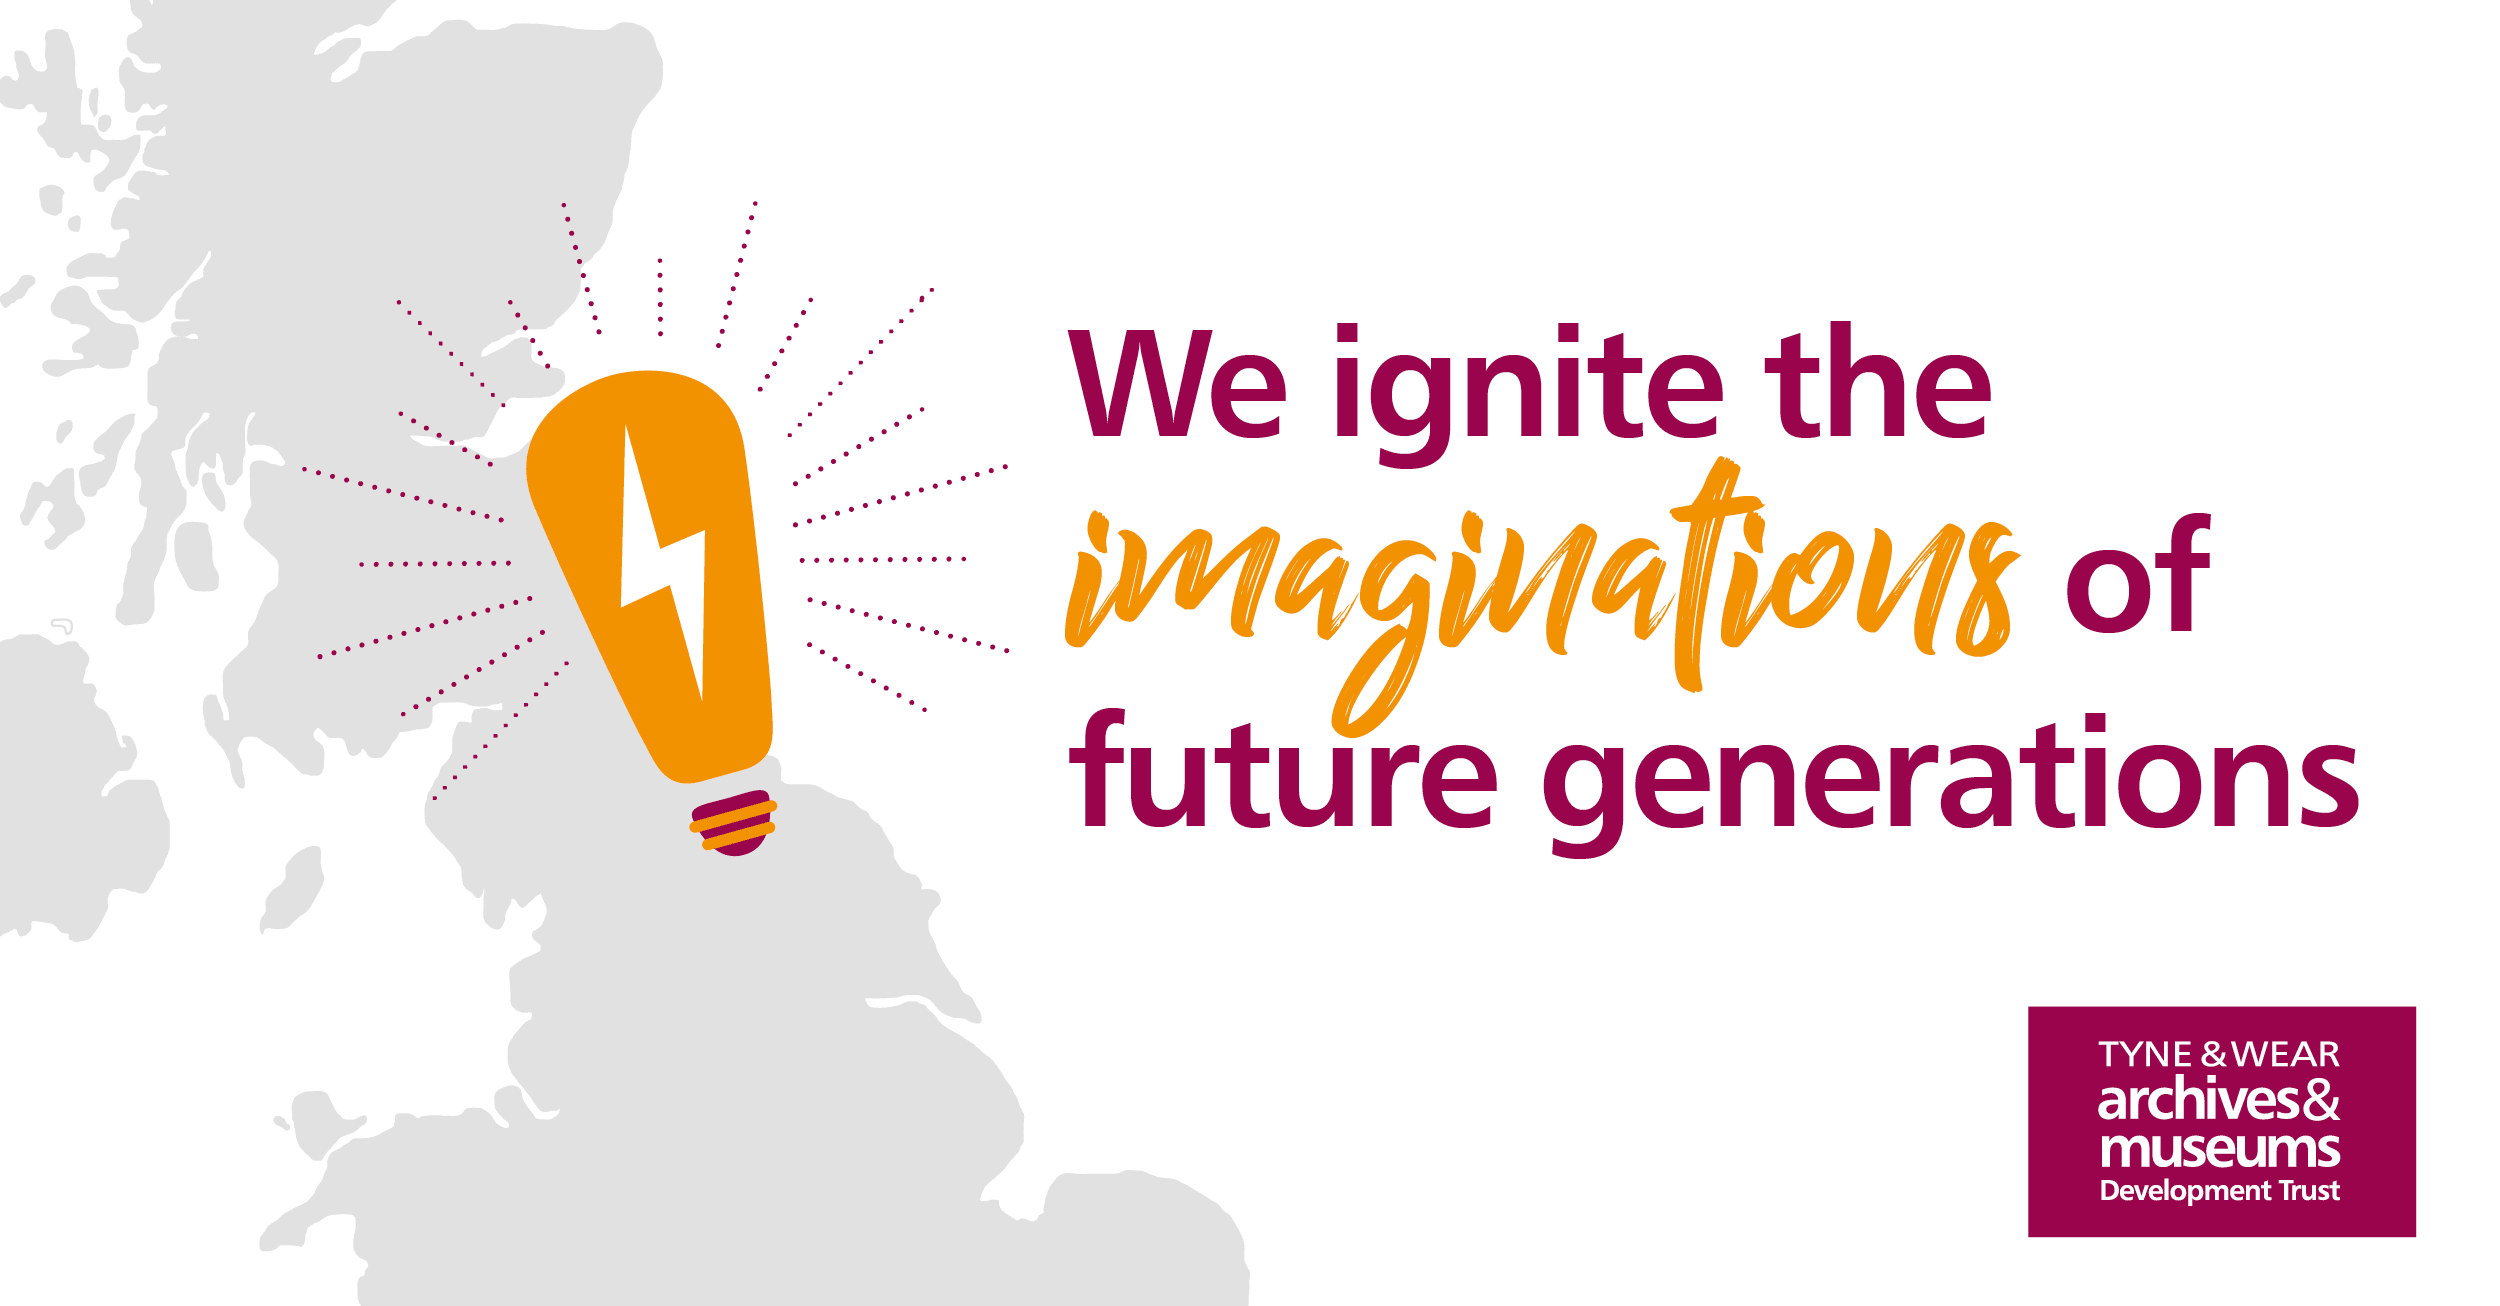 We ignite the imaginations of future generations.